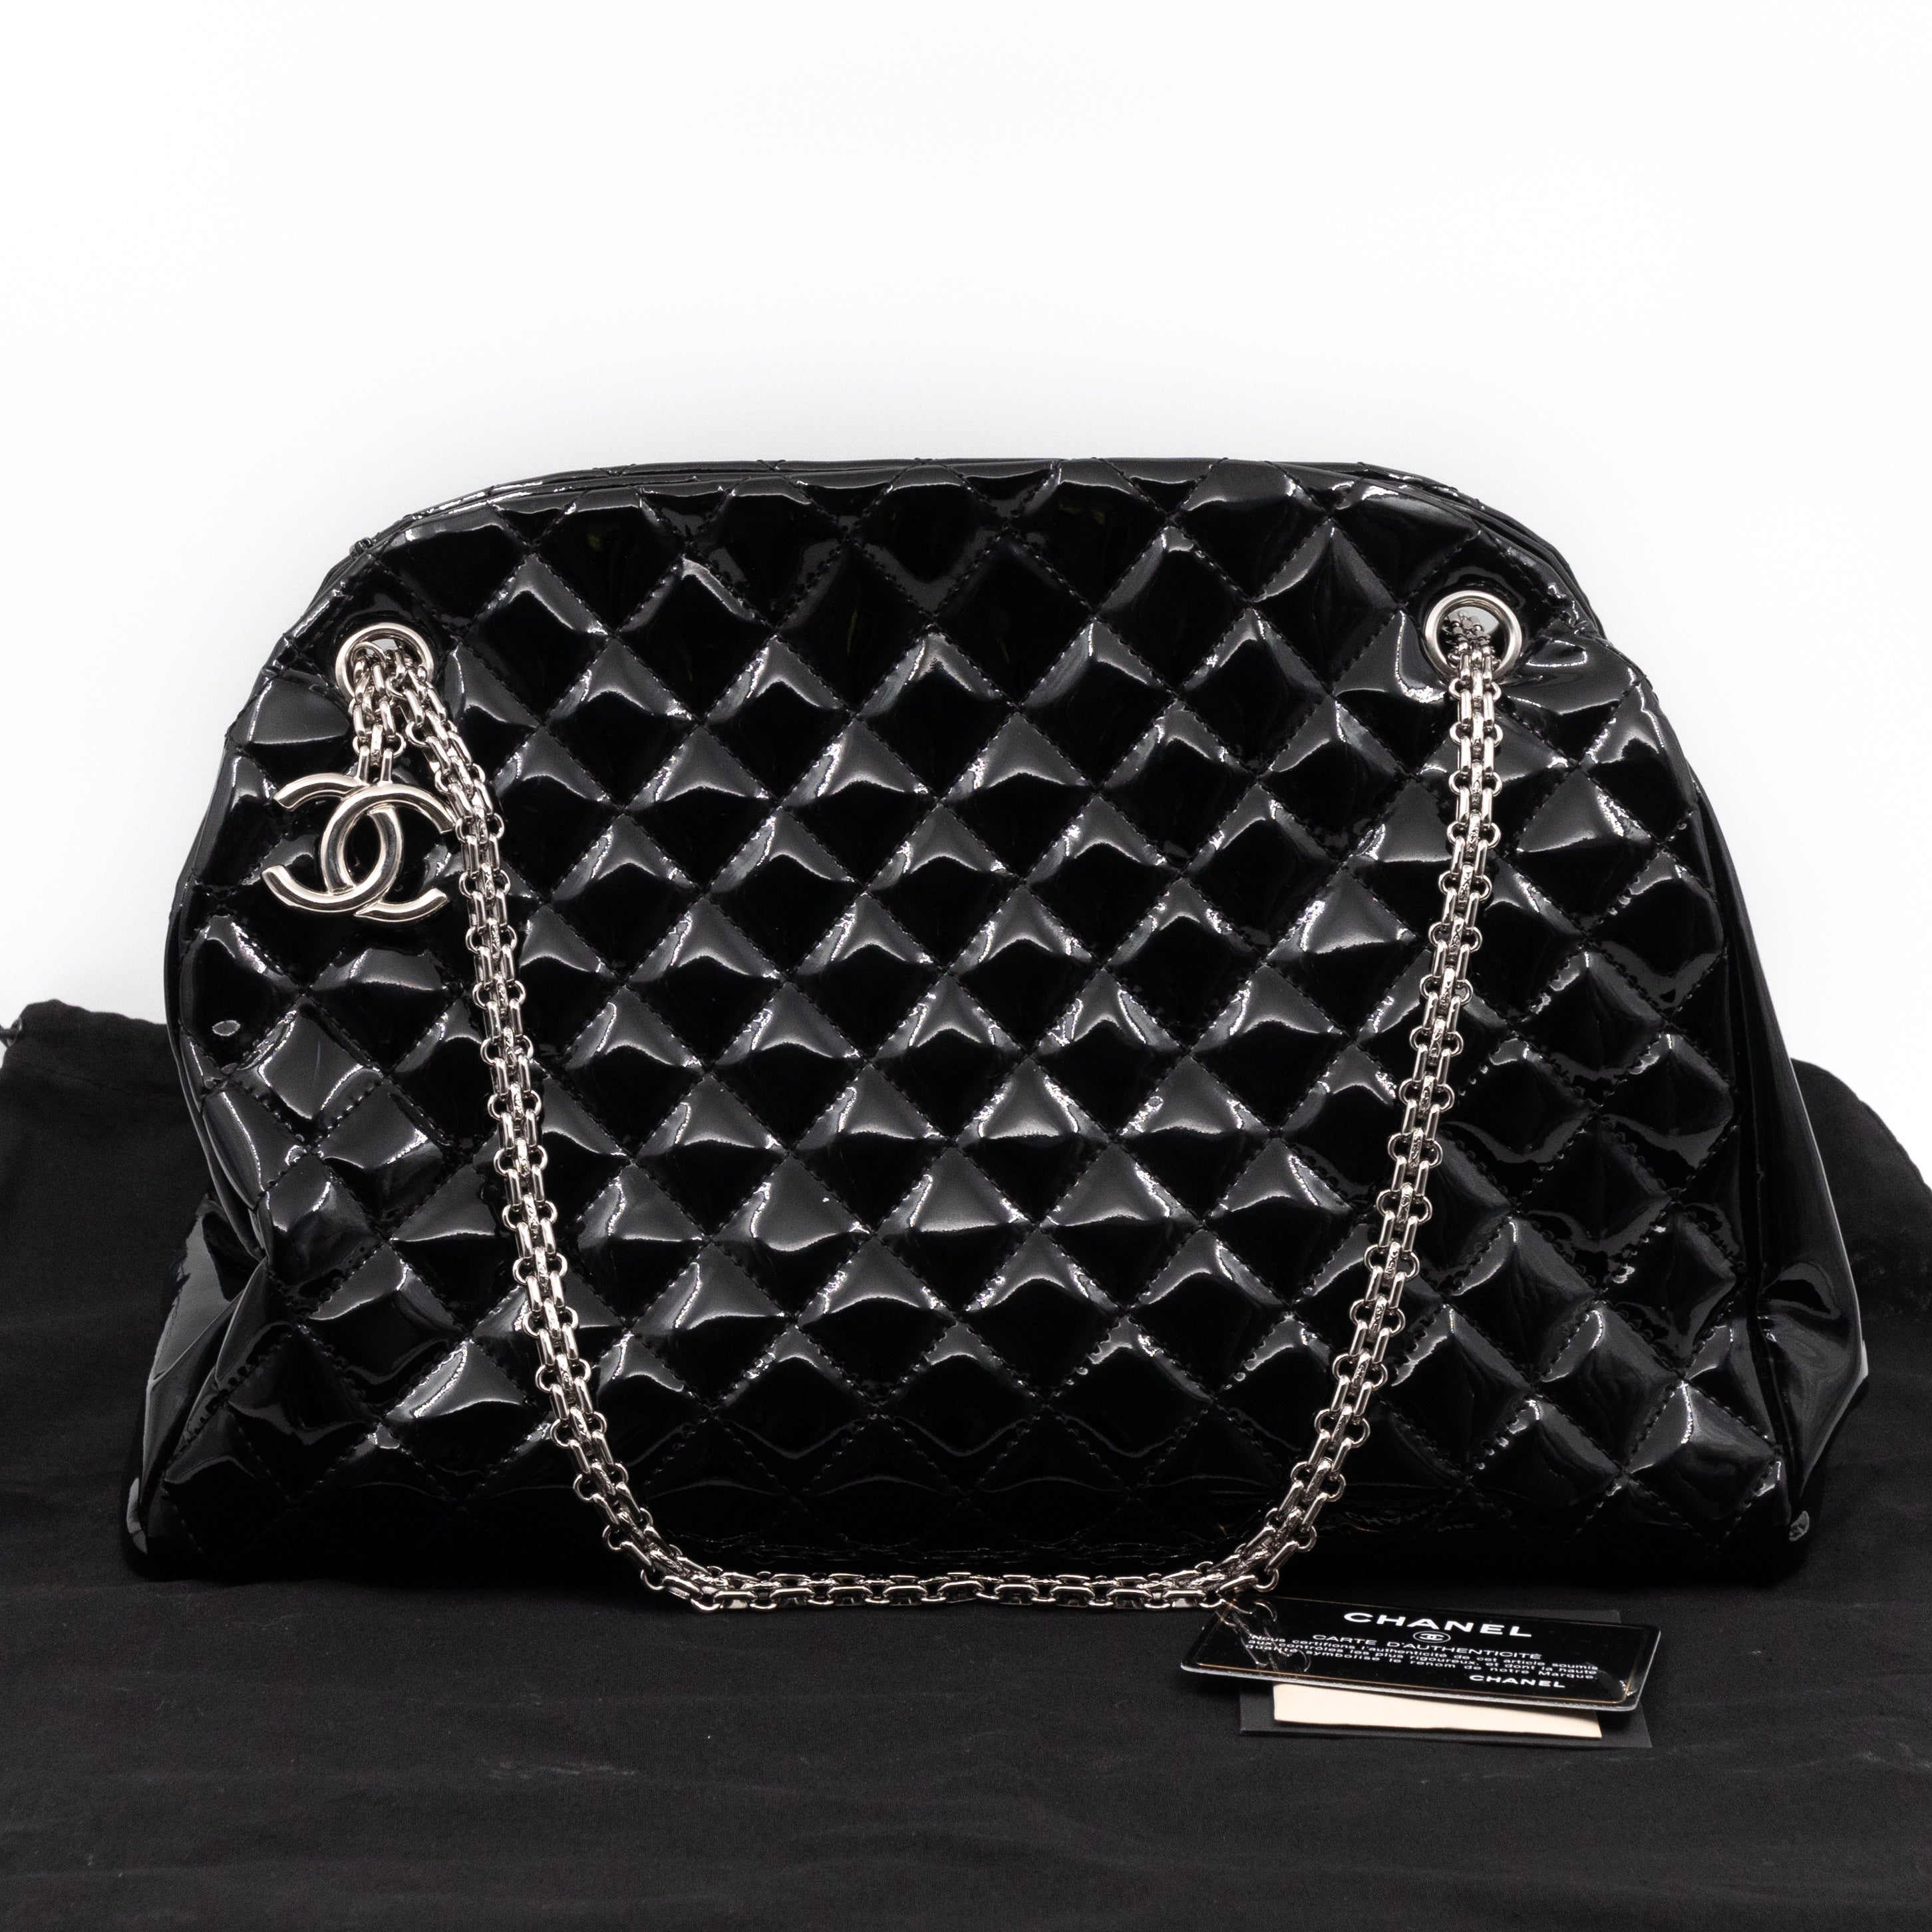 Chanel – Chanel Large Mademoiselle Bowling Bag Diamond